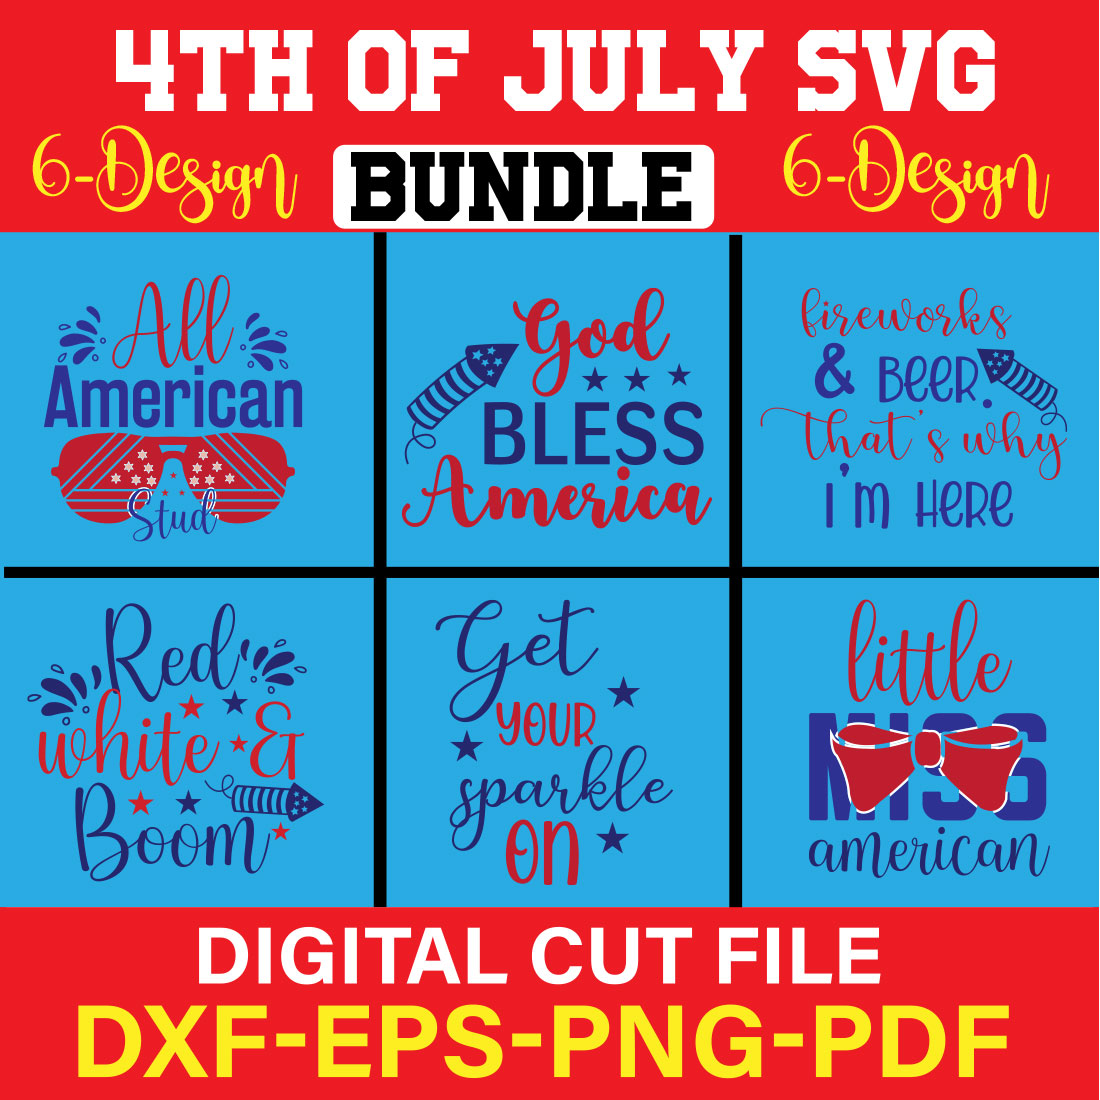 4th of July SVG Bundle Vol-4 cover image.